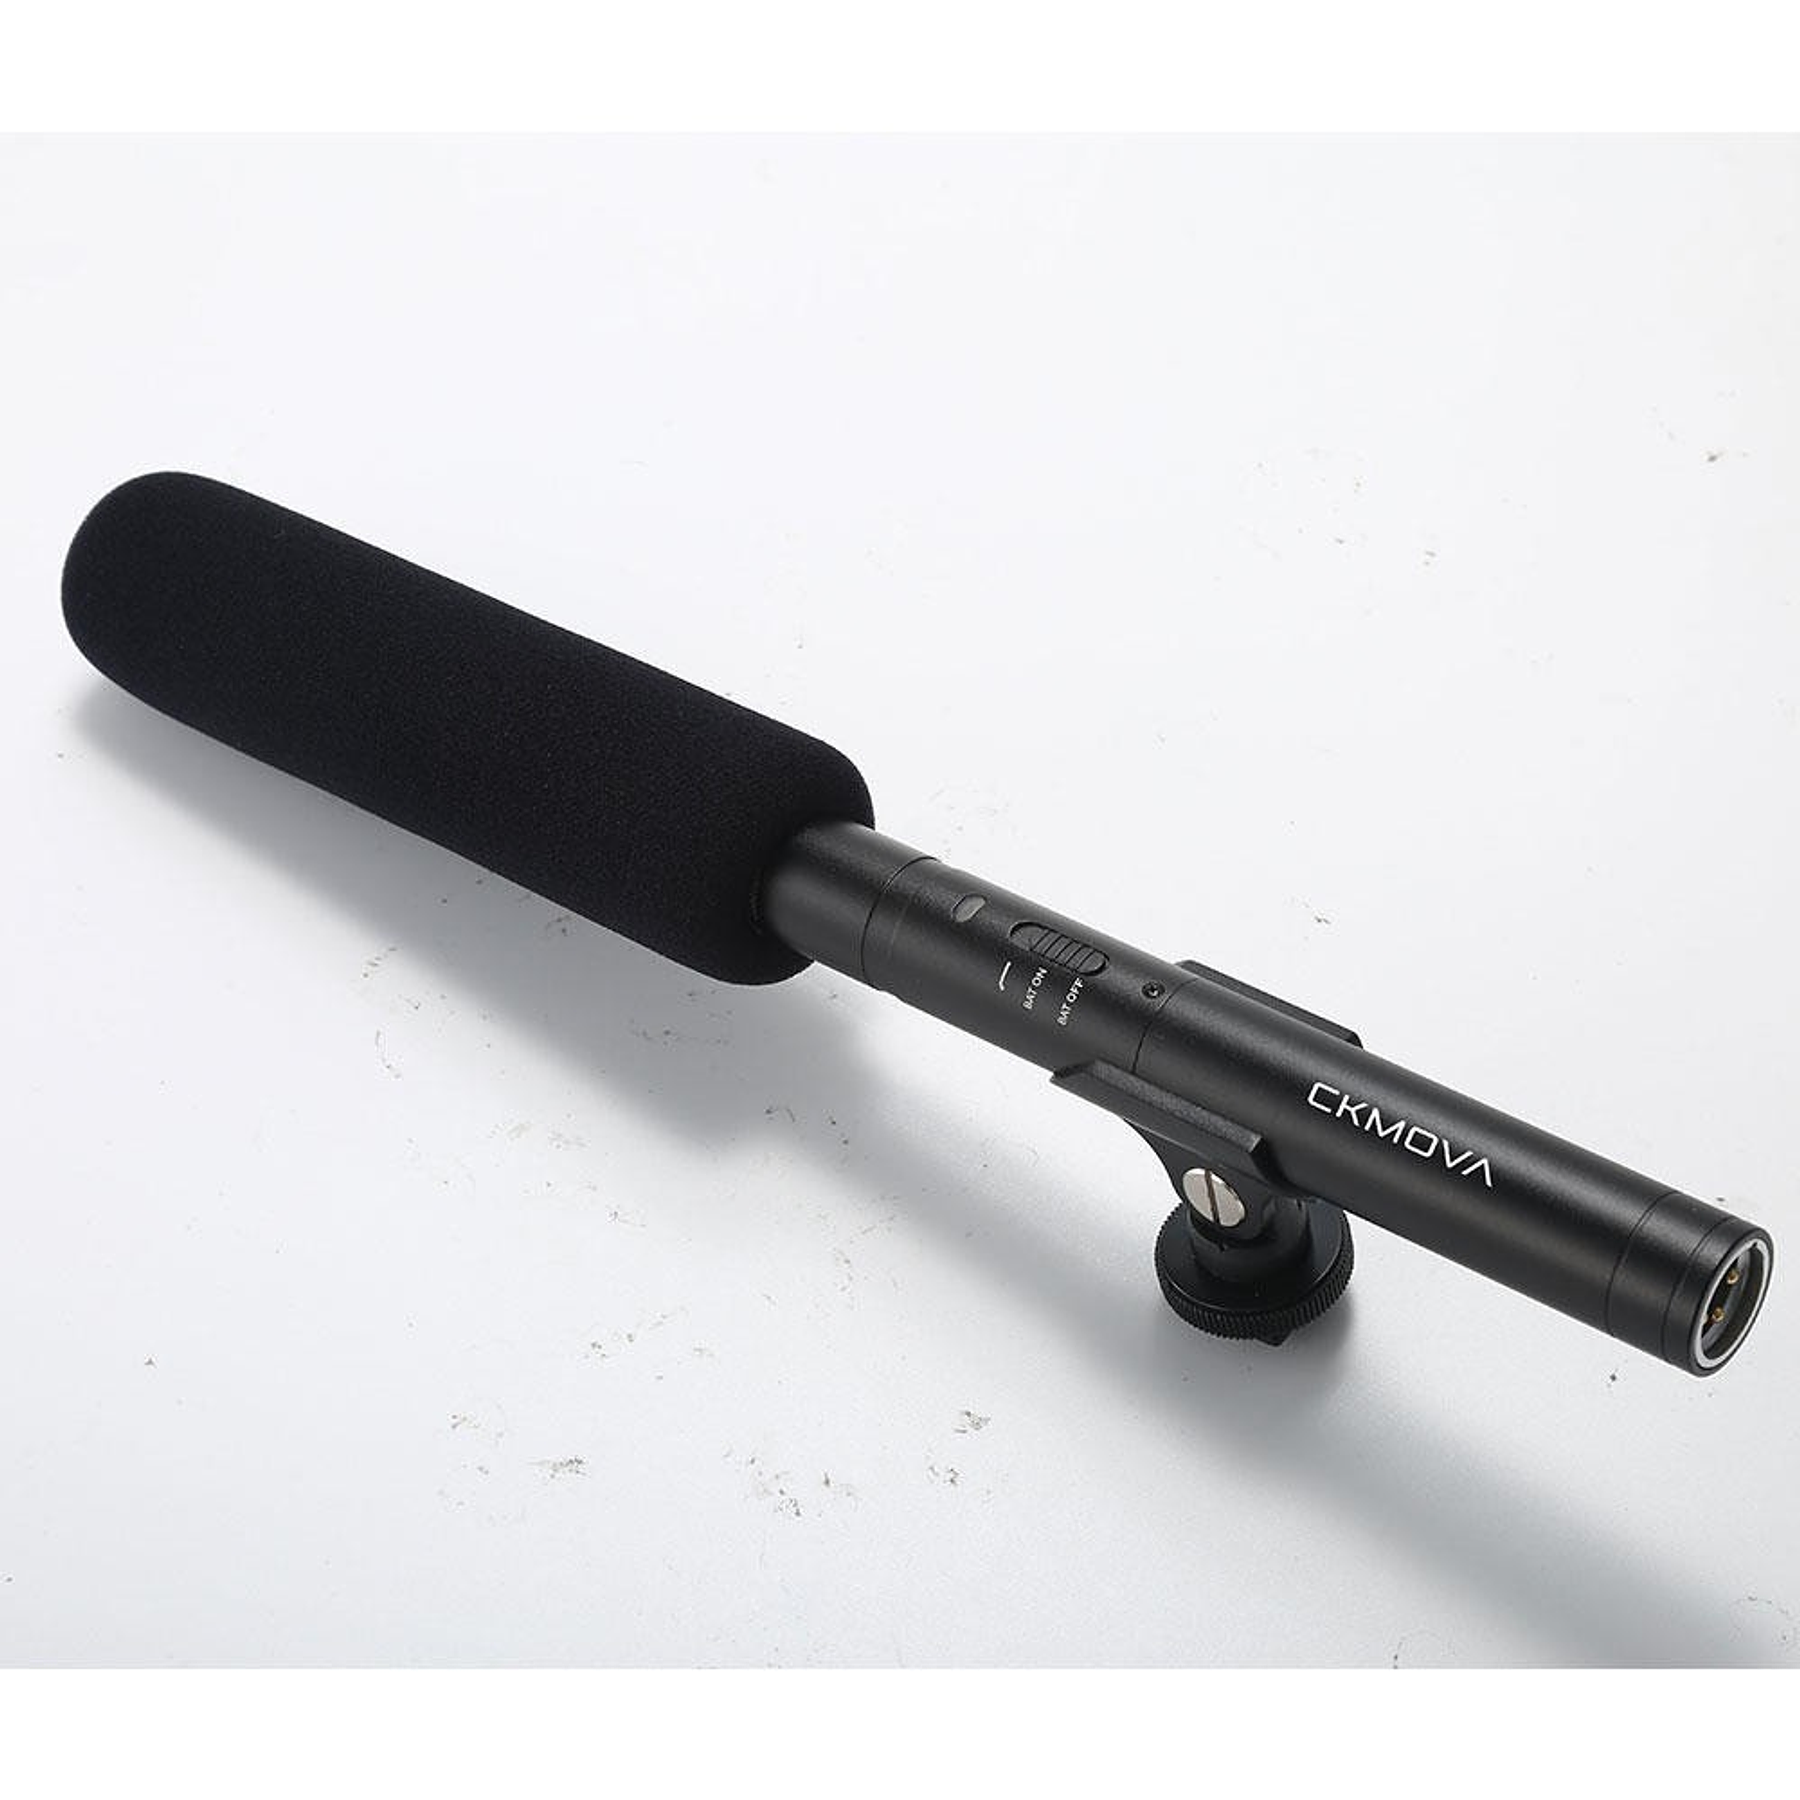 Microfono Ckmova Shotgun Direccional para Broadcast de Condensador Largo 38 cm